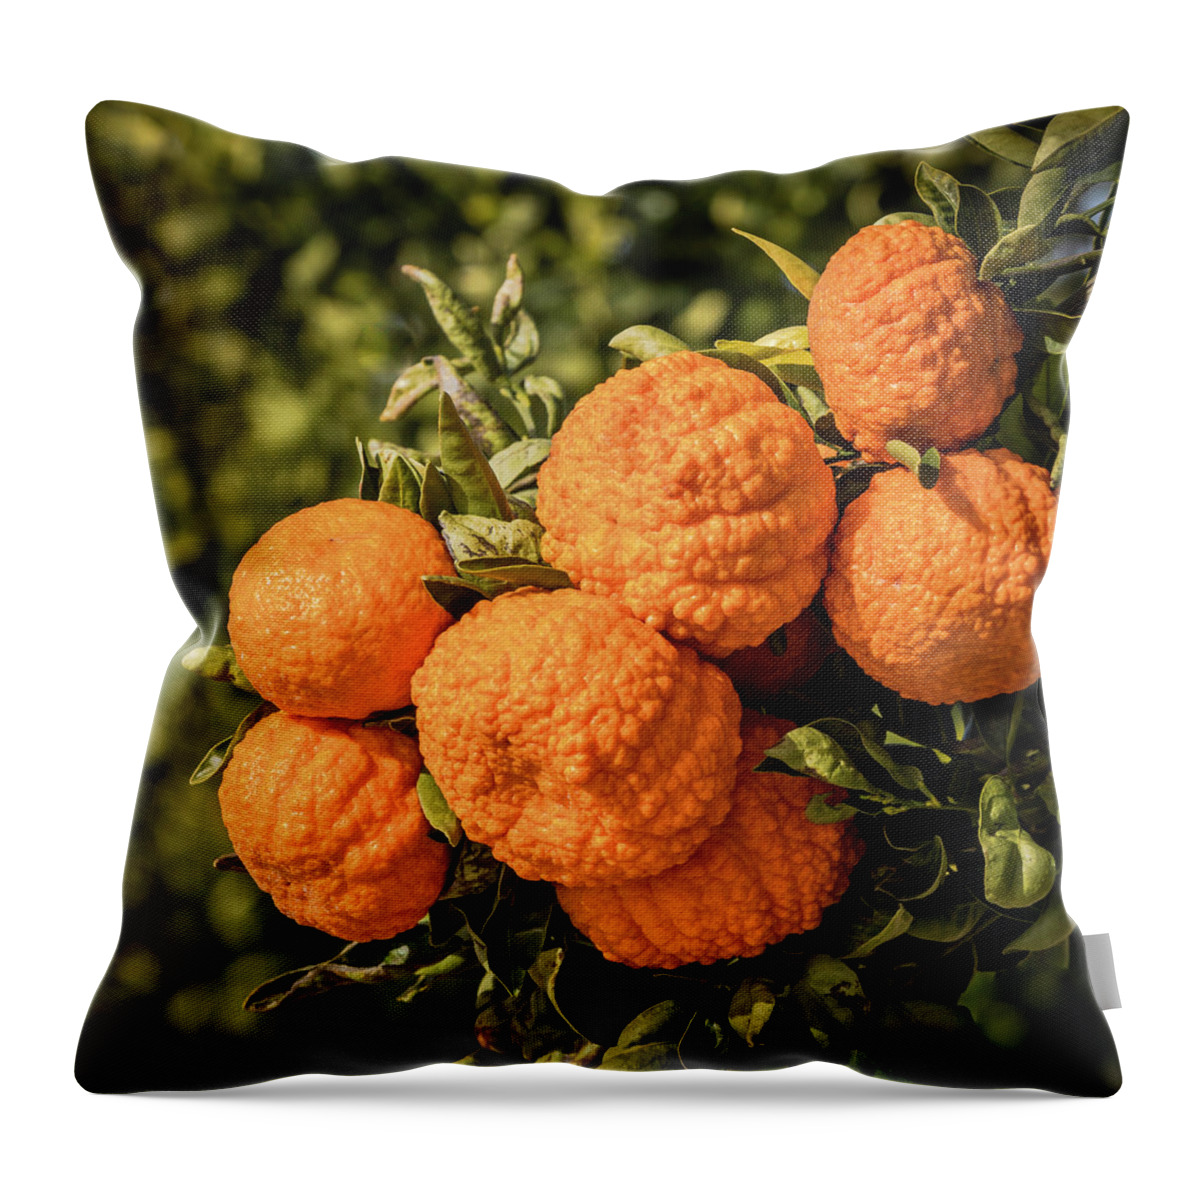 Mandarin Throw Pillow featuring the photograph Tree Branch With Gold Nugget Mandarins by Elvira Peretsman